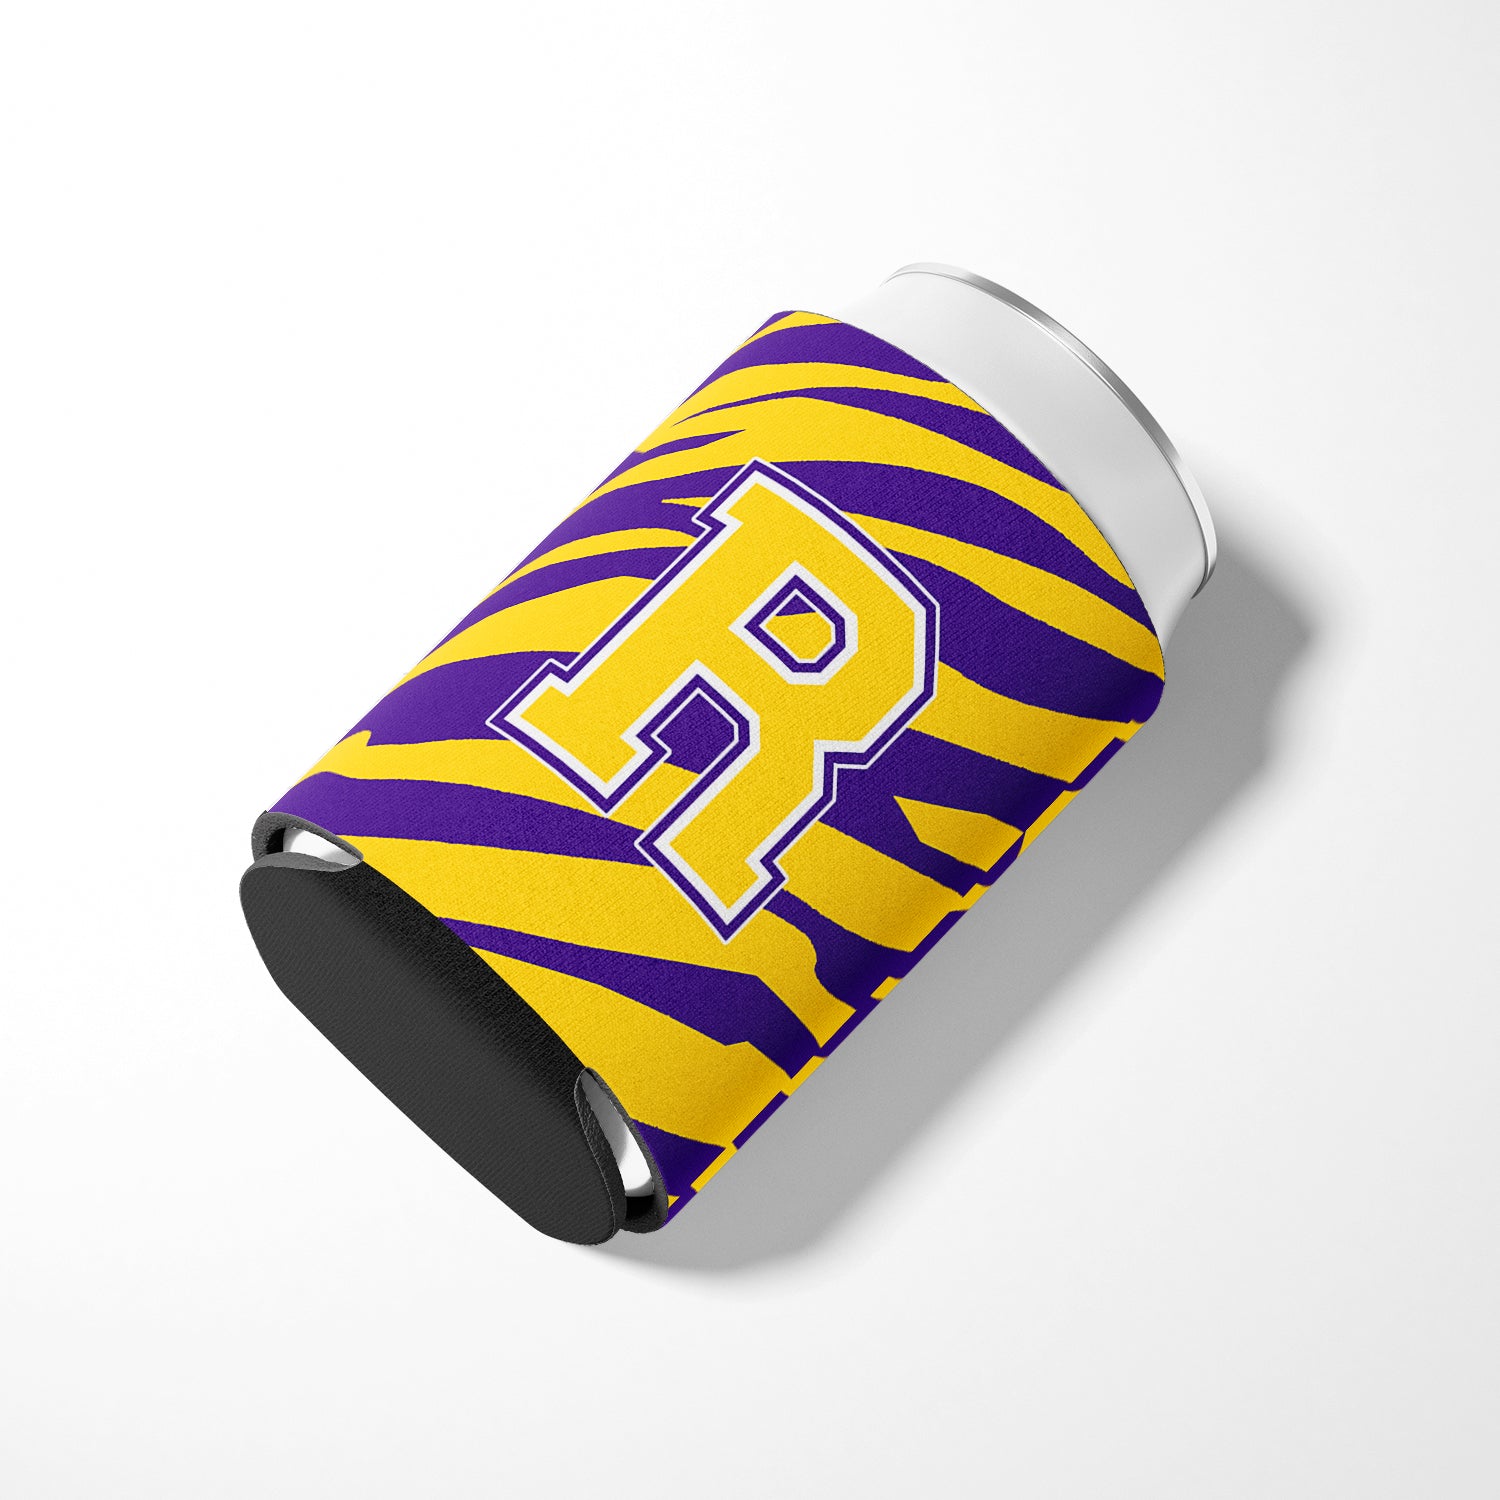 Monogram - Tiger Stripe - Purple Gold Can or Bottle Beverage Insulator Initial R.